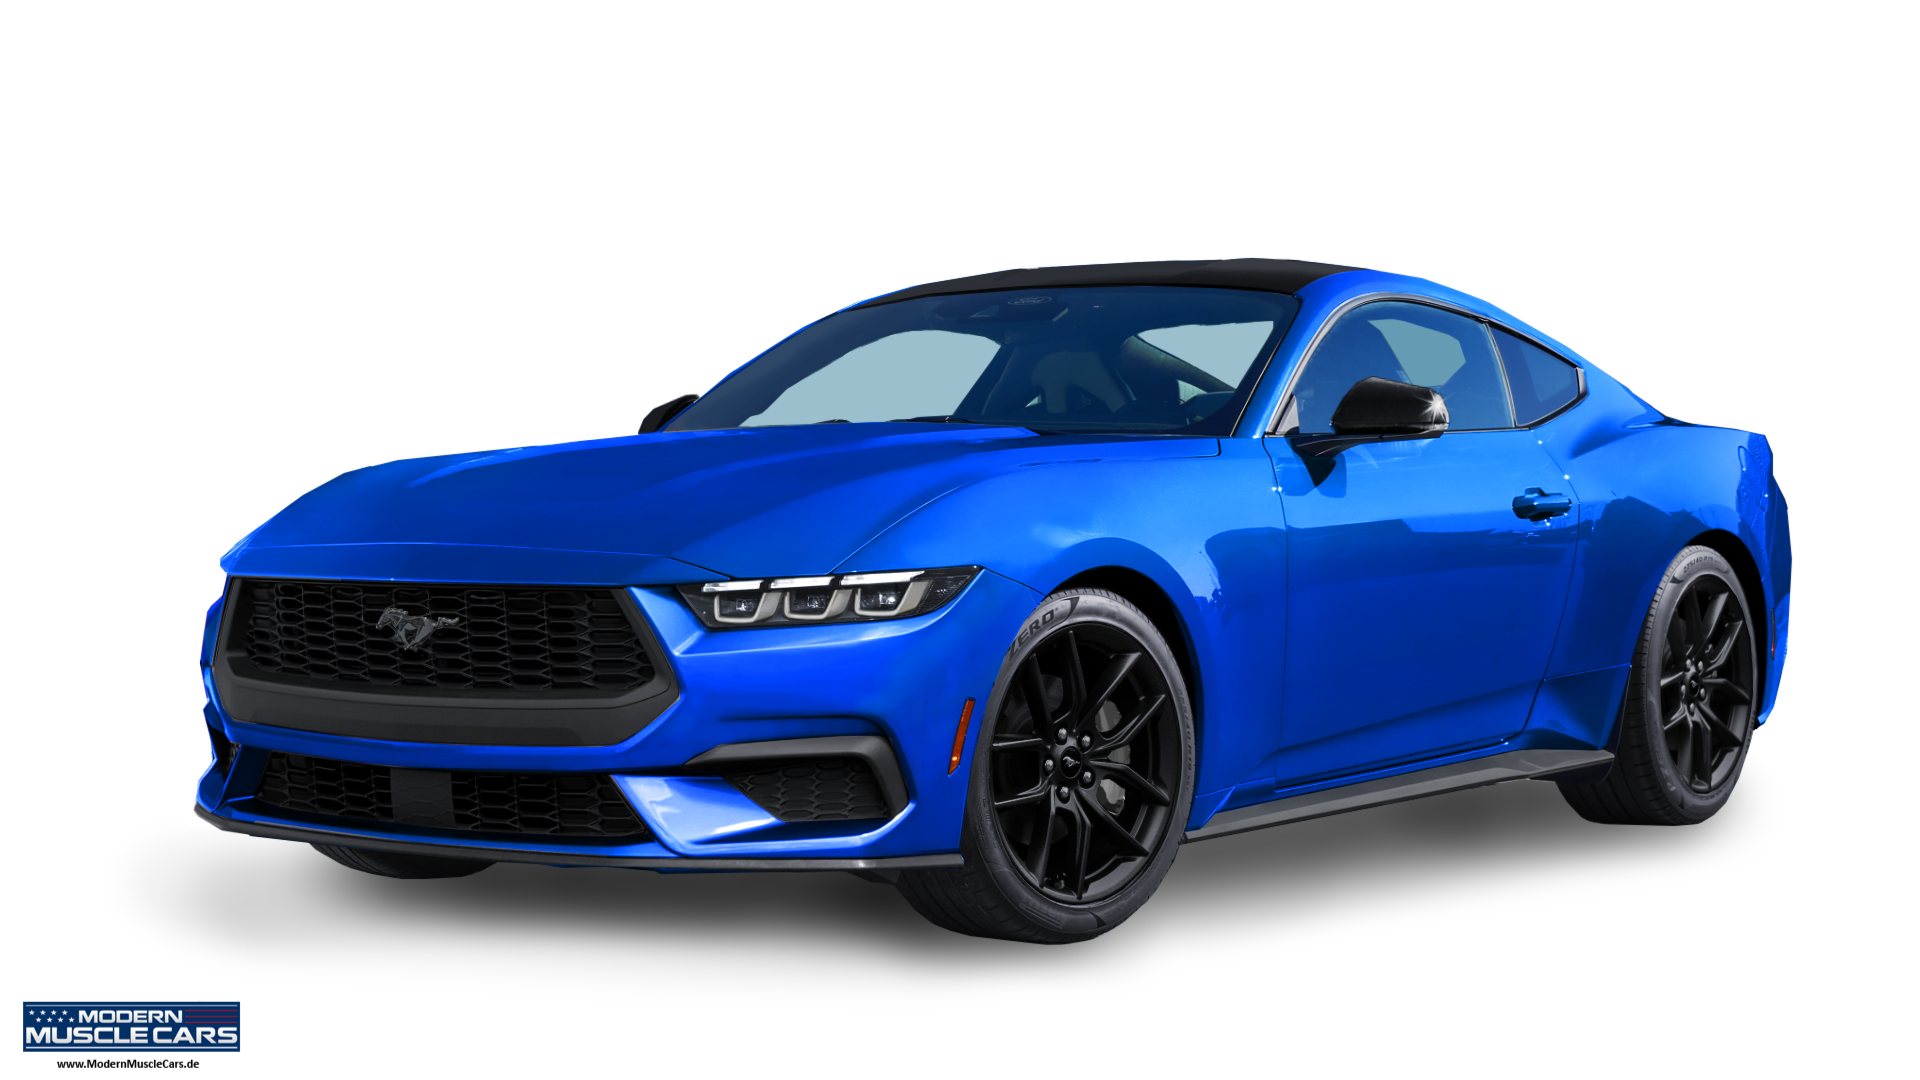 S650 Mustang Introduce Yourself to Mustang7G! 091D7948-72A7-4292-9E91-85E2D292DA69